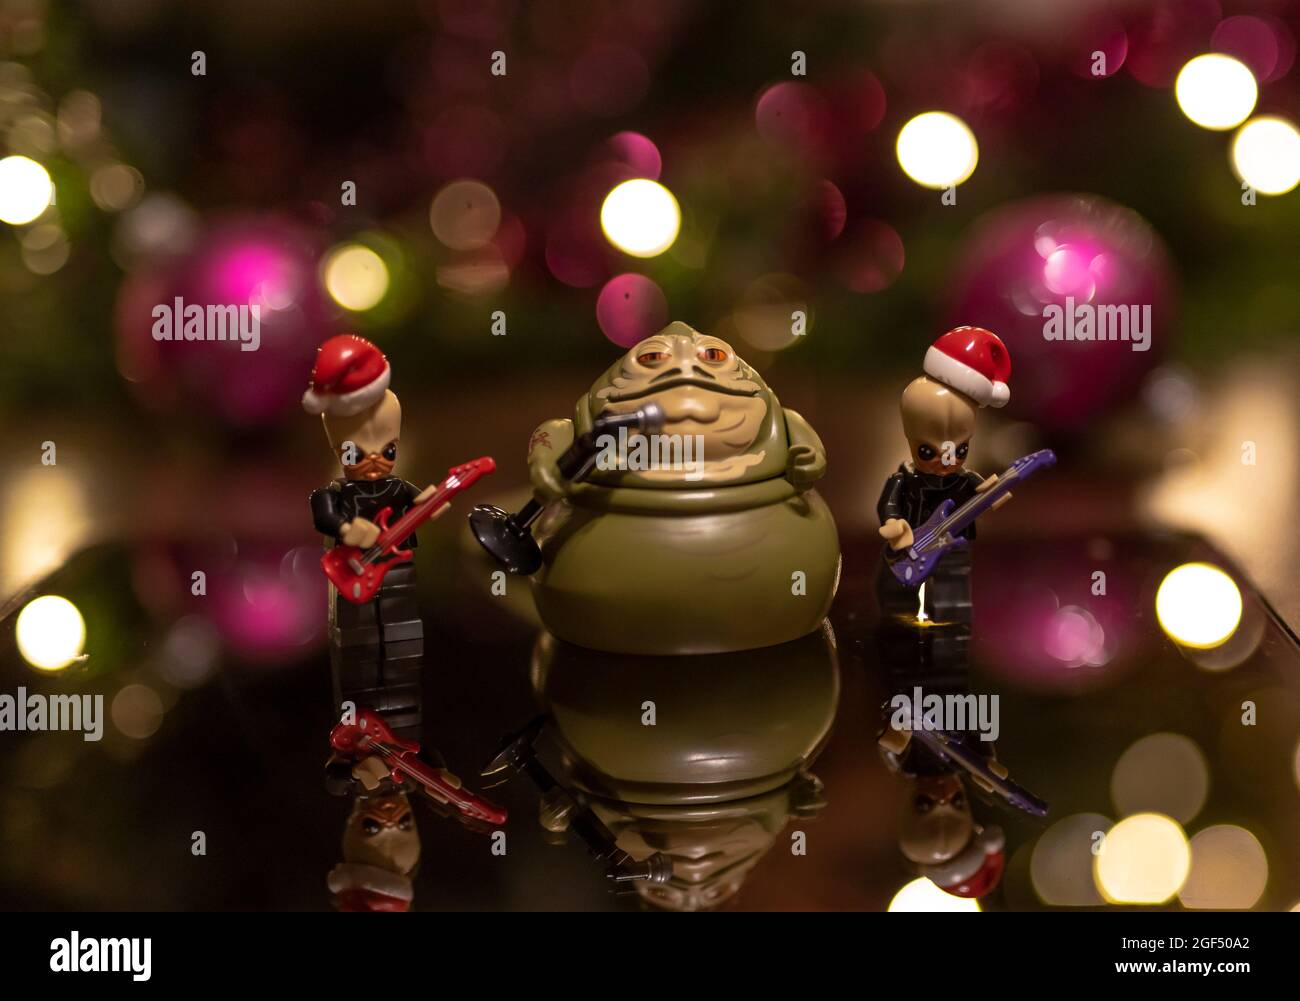 Lego star wars minifigures singing christmas song Stock Photo